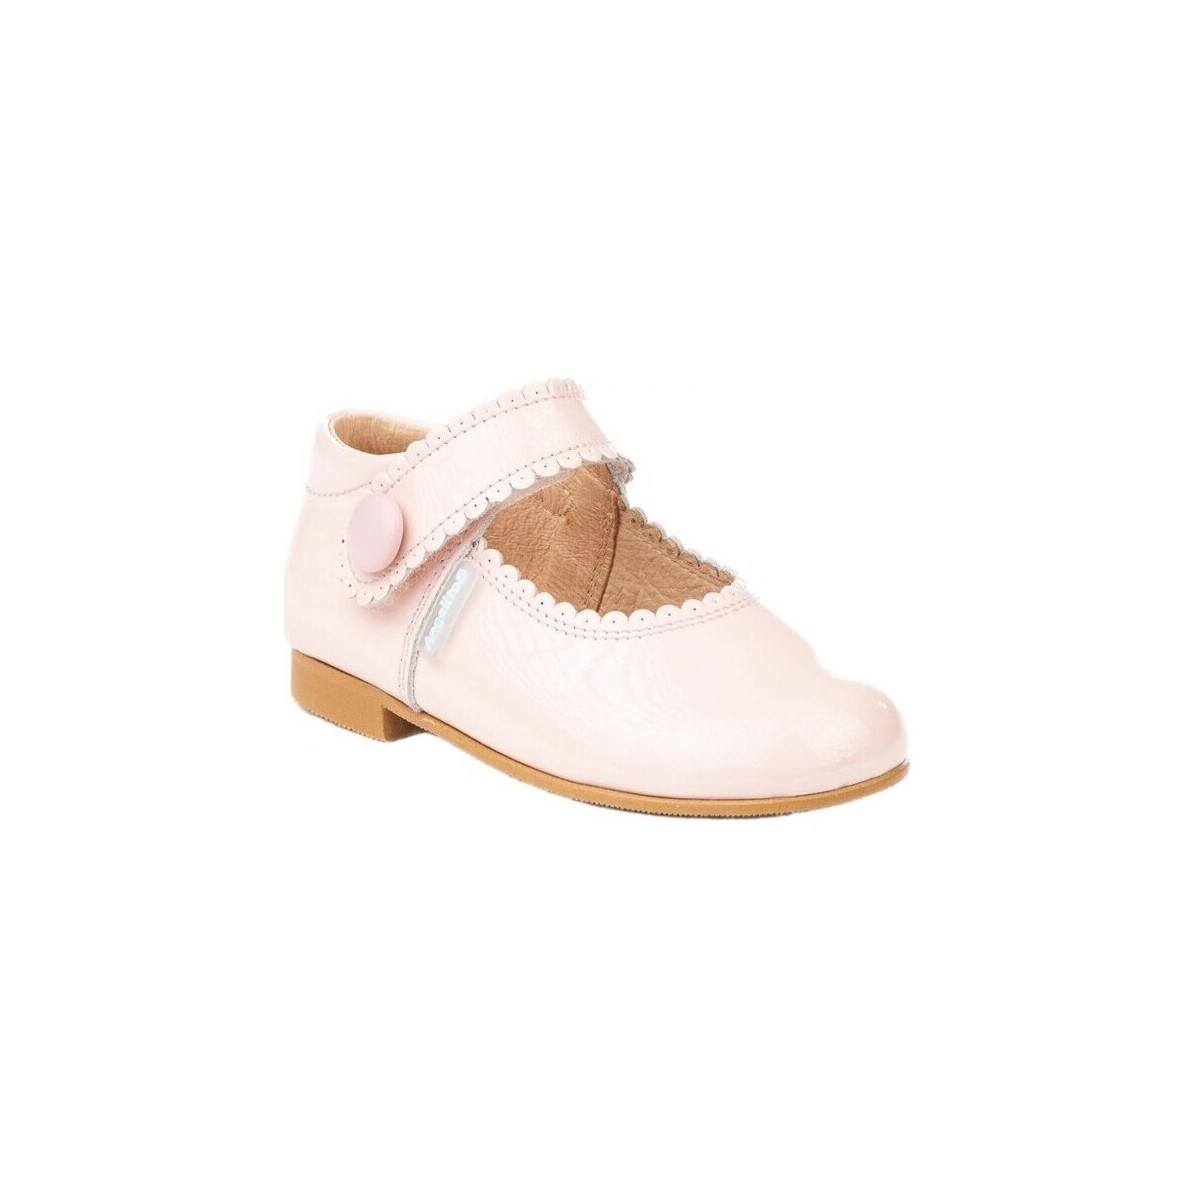 Schuhe Mädchen Ballerinas Angelitos 25920-15 Rosa